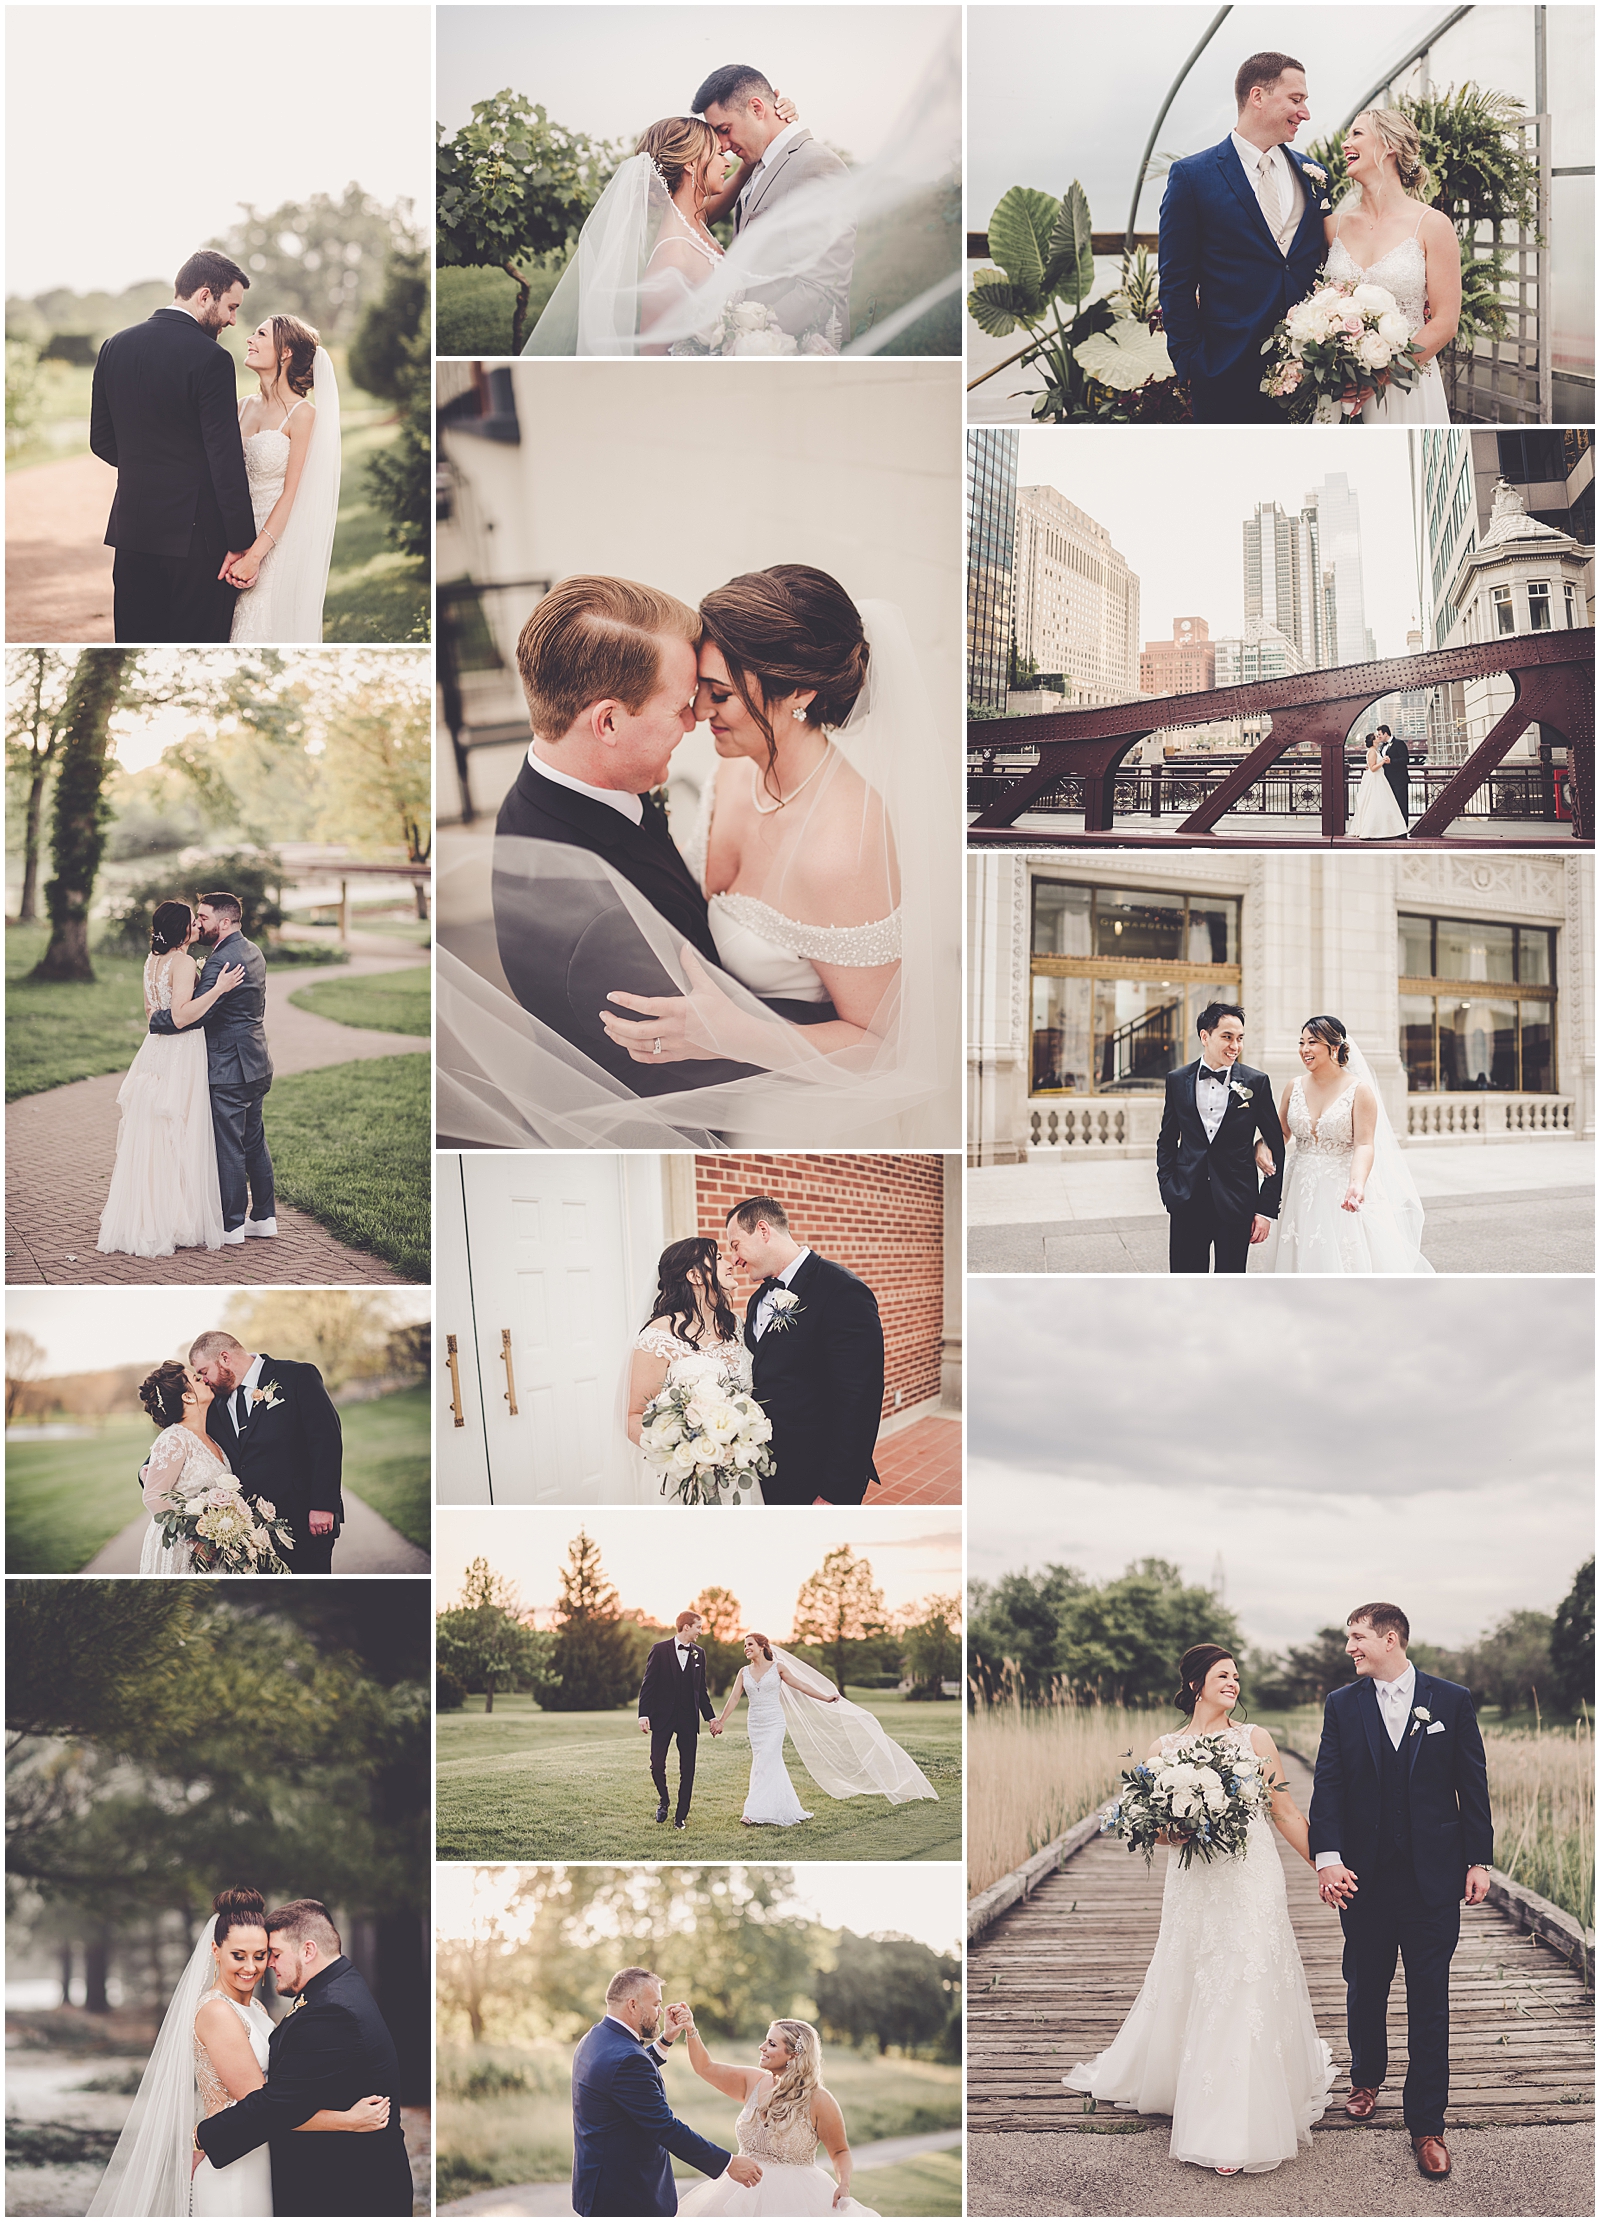 Chicagoland wedding photographer Kara Evans Photographer's recap of the 2021 wedding season throughout Chicago and Chicagoland.